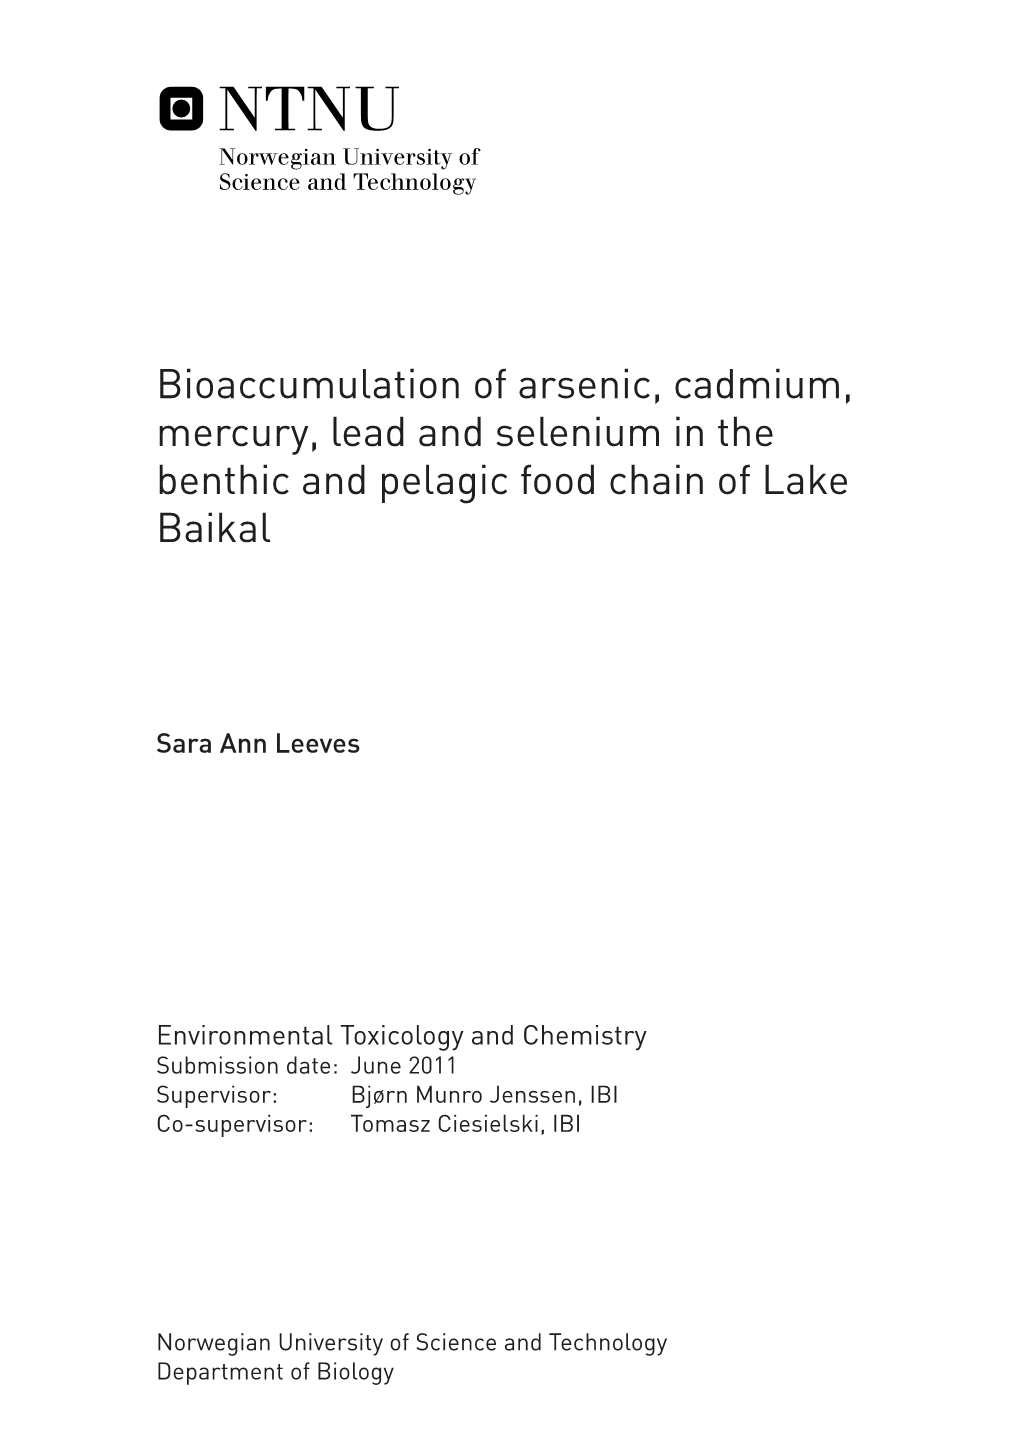 Bioaccumulation of Arsenic, Cadmium, Mercury, Lead and Selenium in the Benthic and Pelagic Food Chain of Lake Baikal